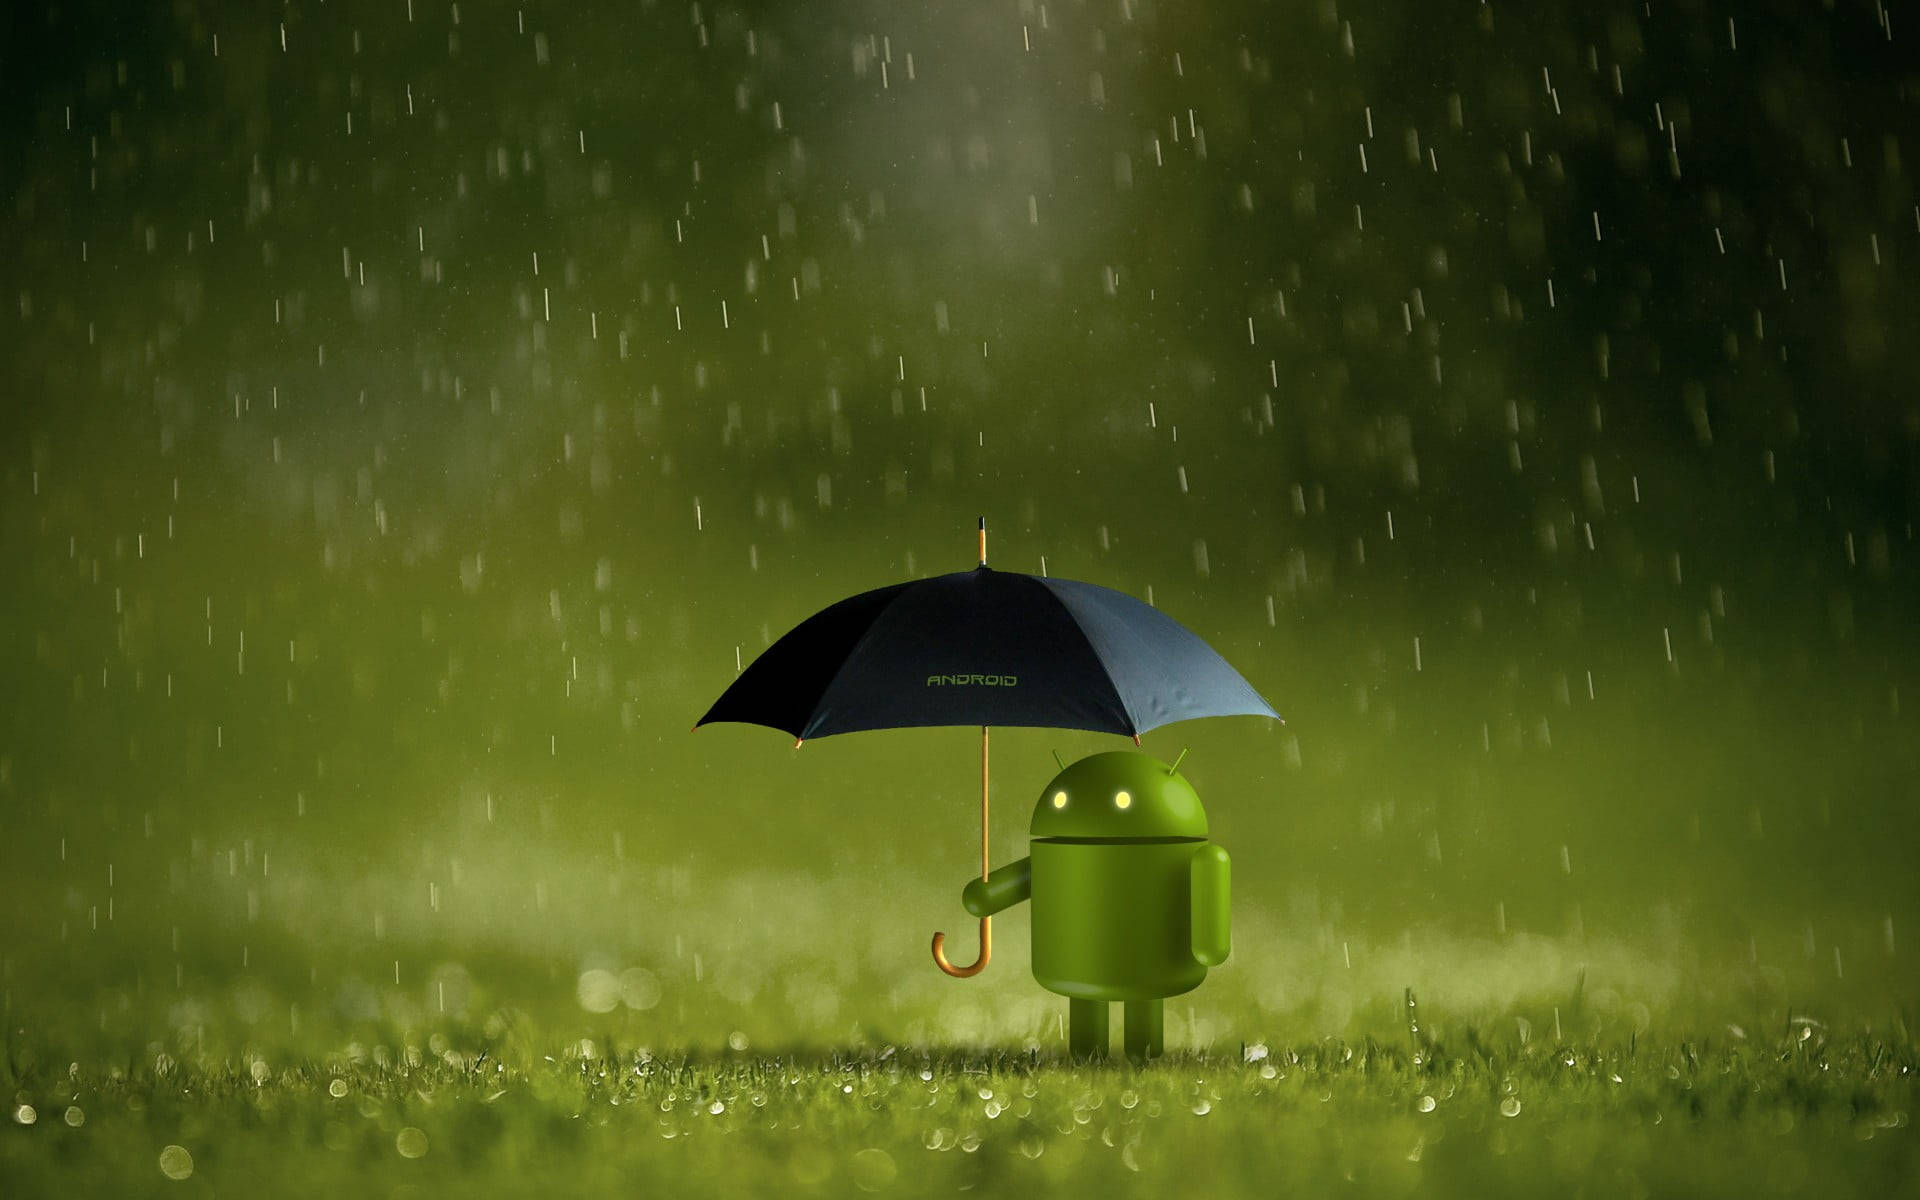 Android Under Blue Umbrella Most Beautiful Rain